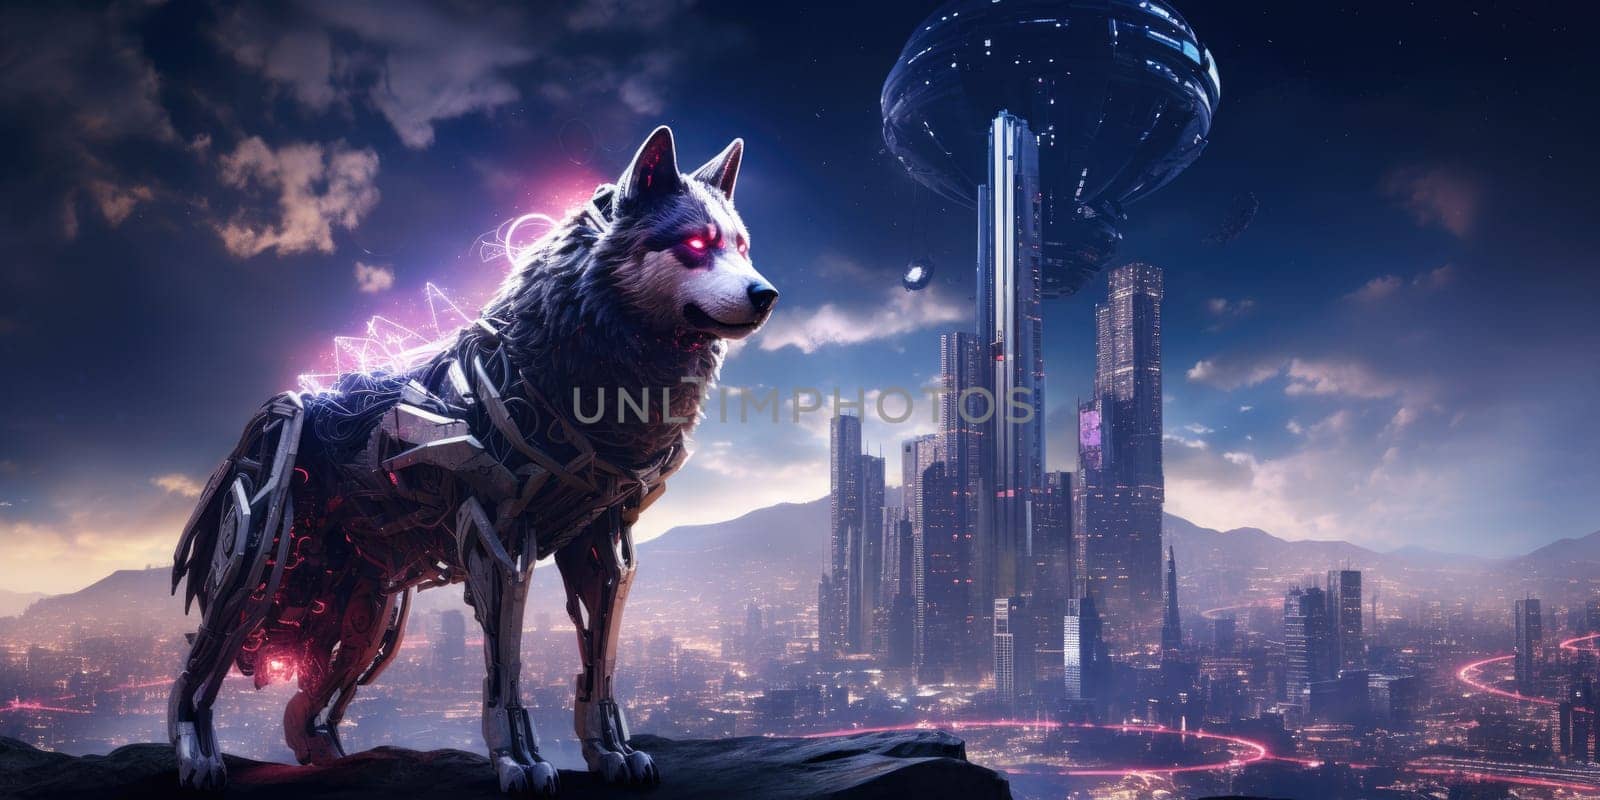 Cyberdog in the future, futurism concept by Kadula